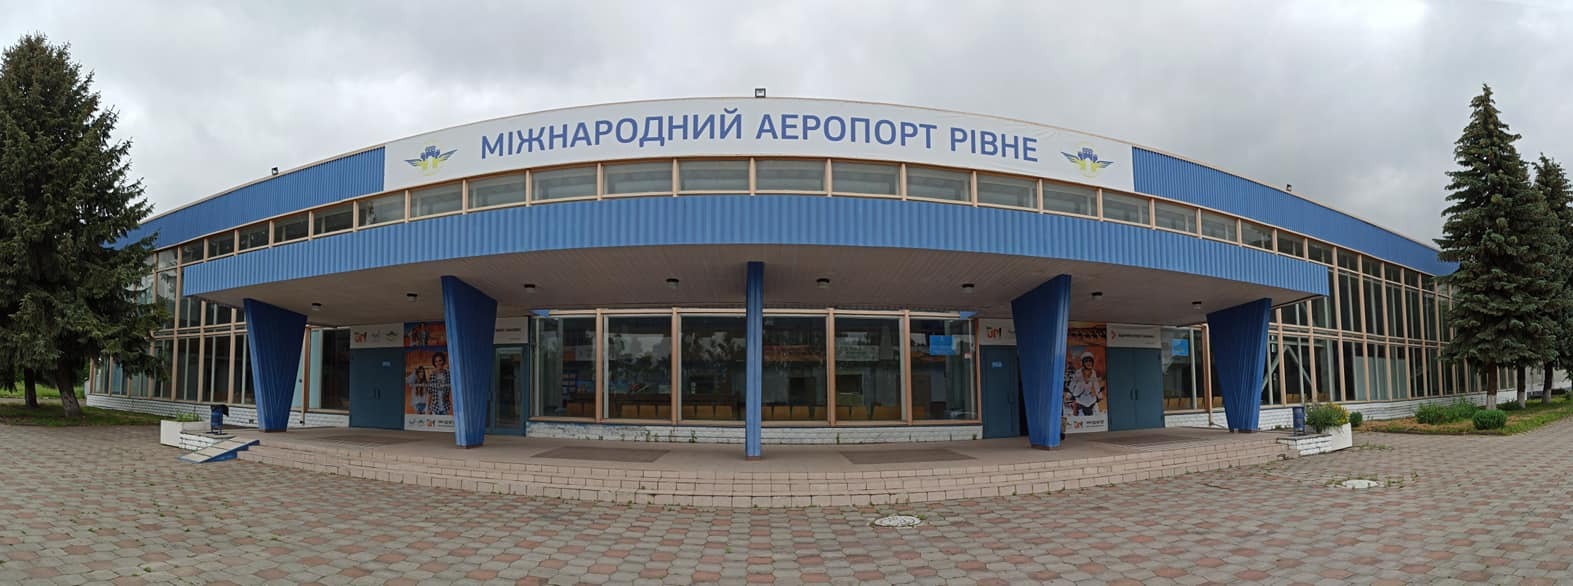 аеропорт_рівне